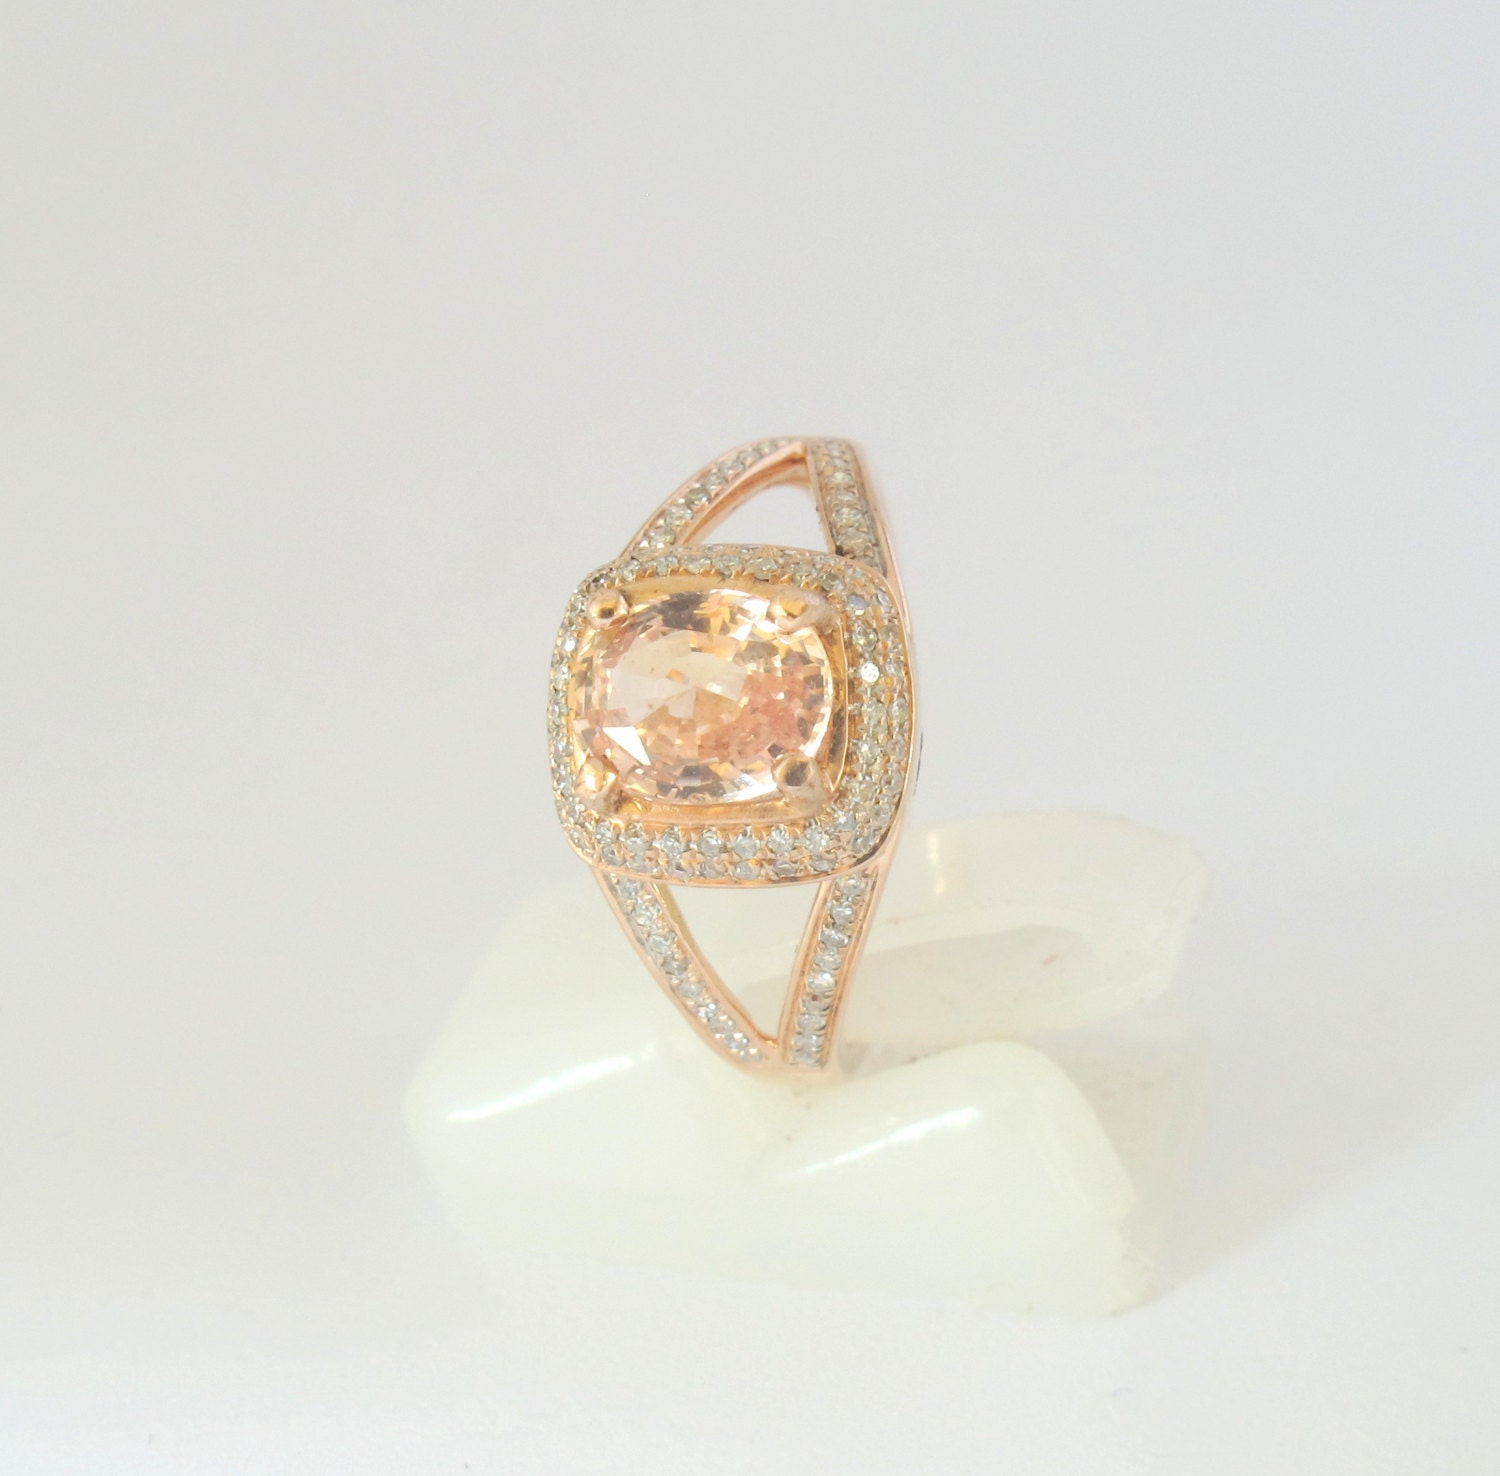 Untreated 1.54 carat Peach Sapphire ring Diamond by AllSapphires